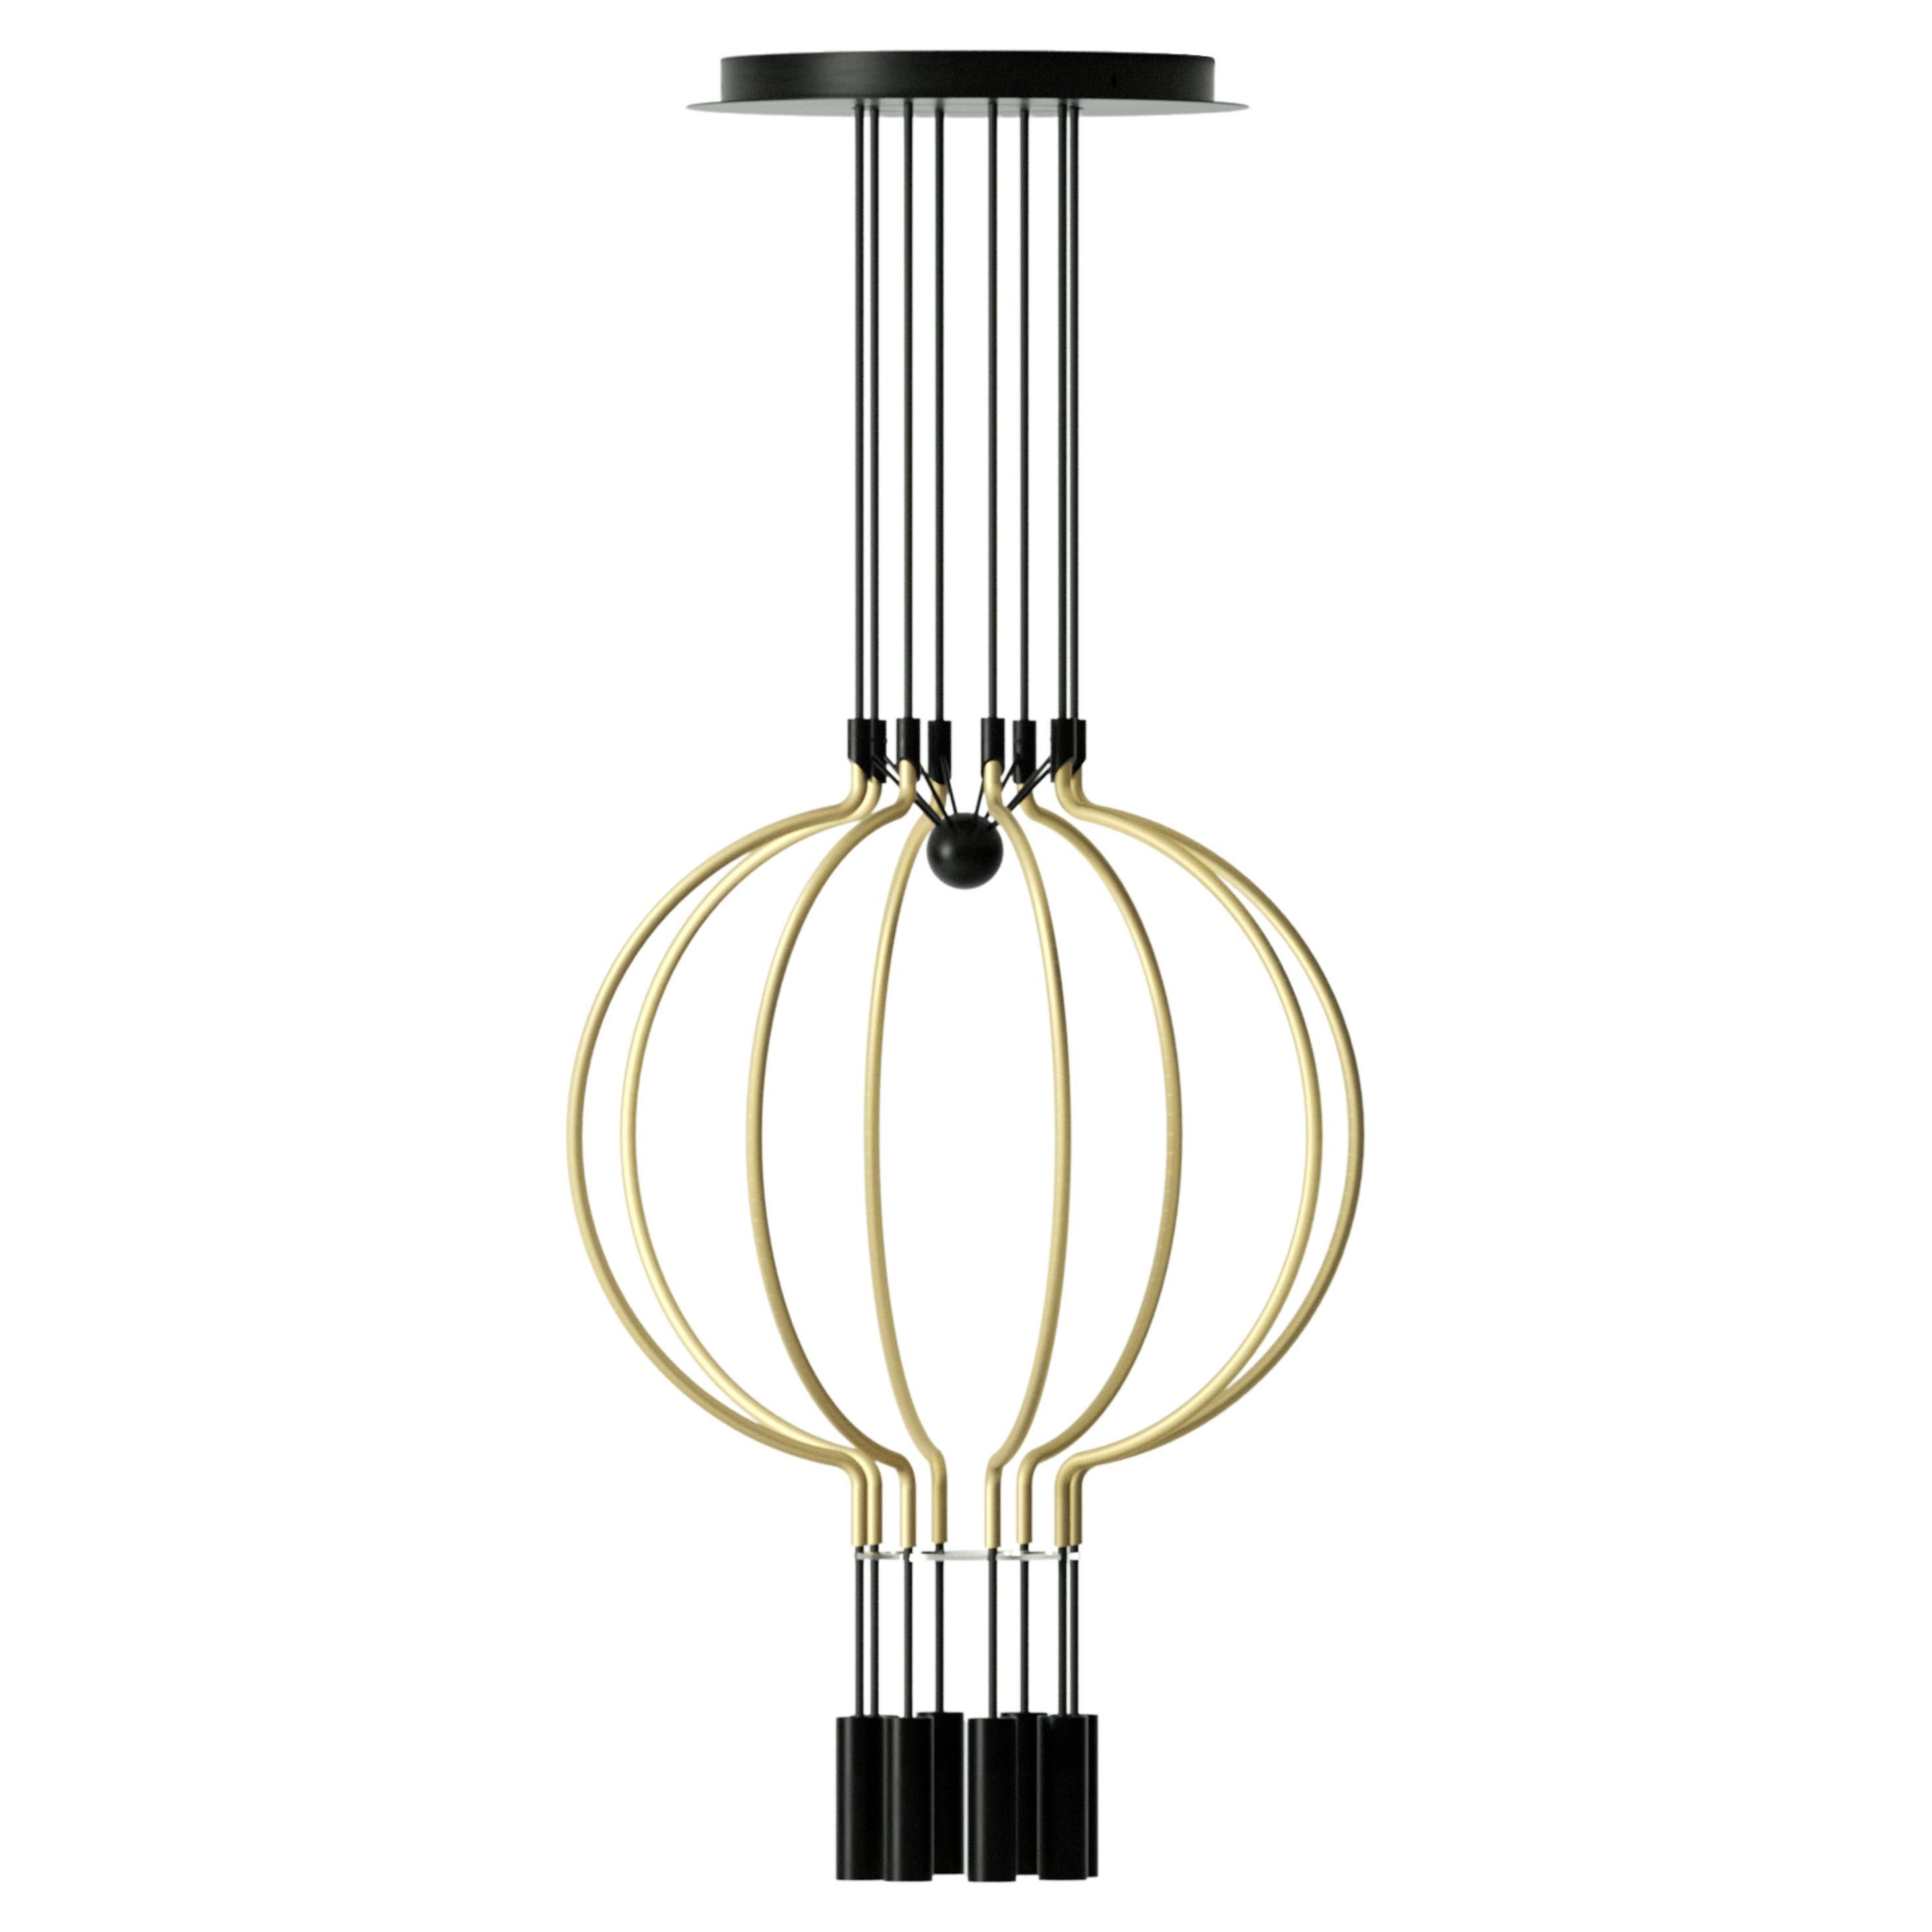 Axolight Liaison Model P8 Pendant Lamp in Gold/Black by Sara Moroni